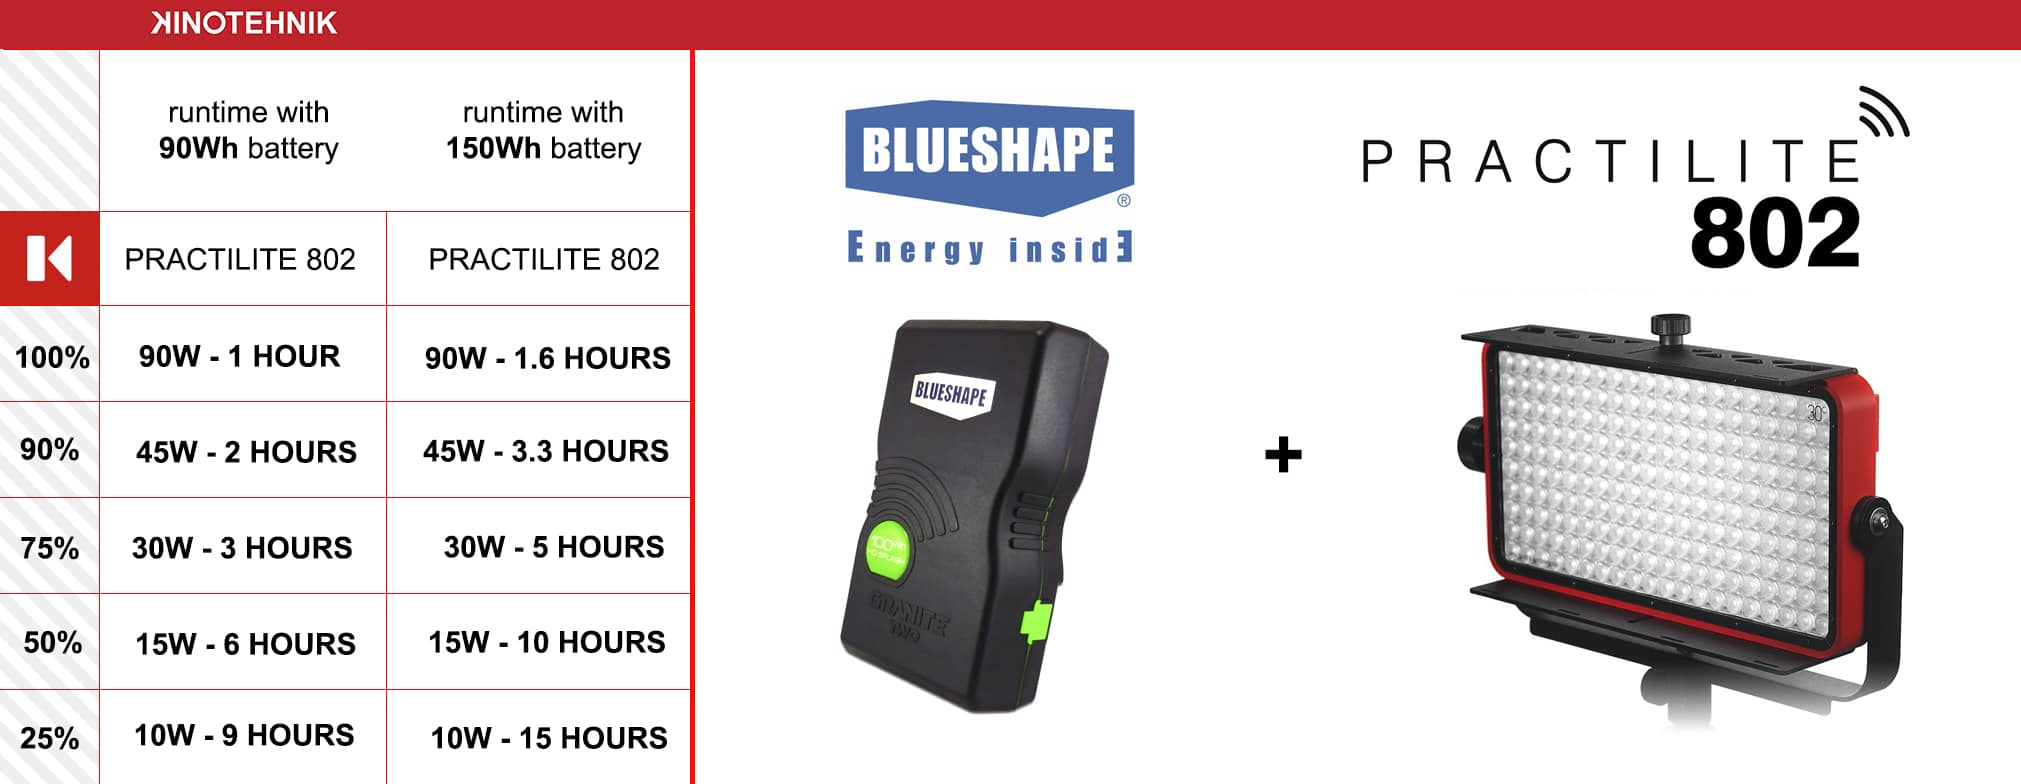 practilite802 practilite 802 led panel blueshape battery